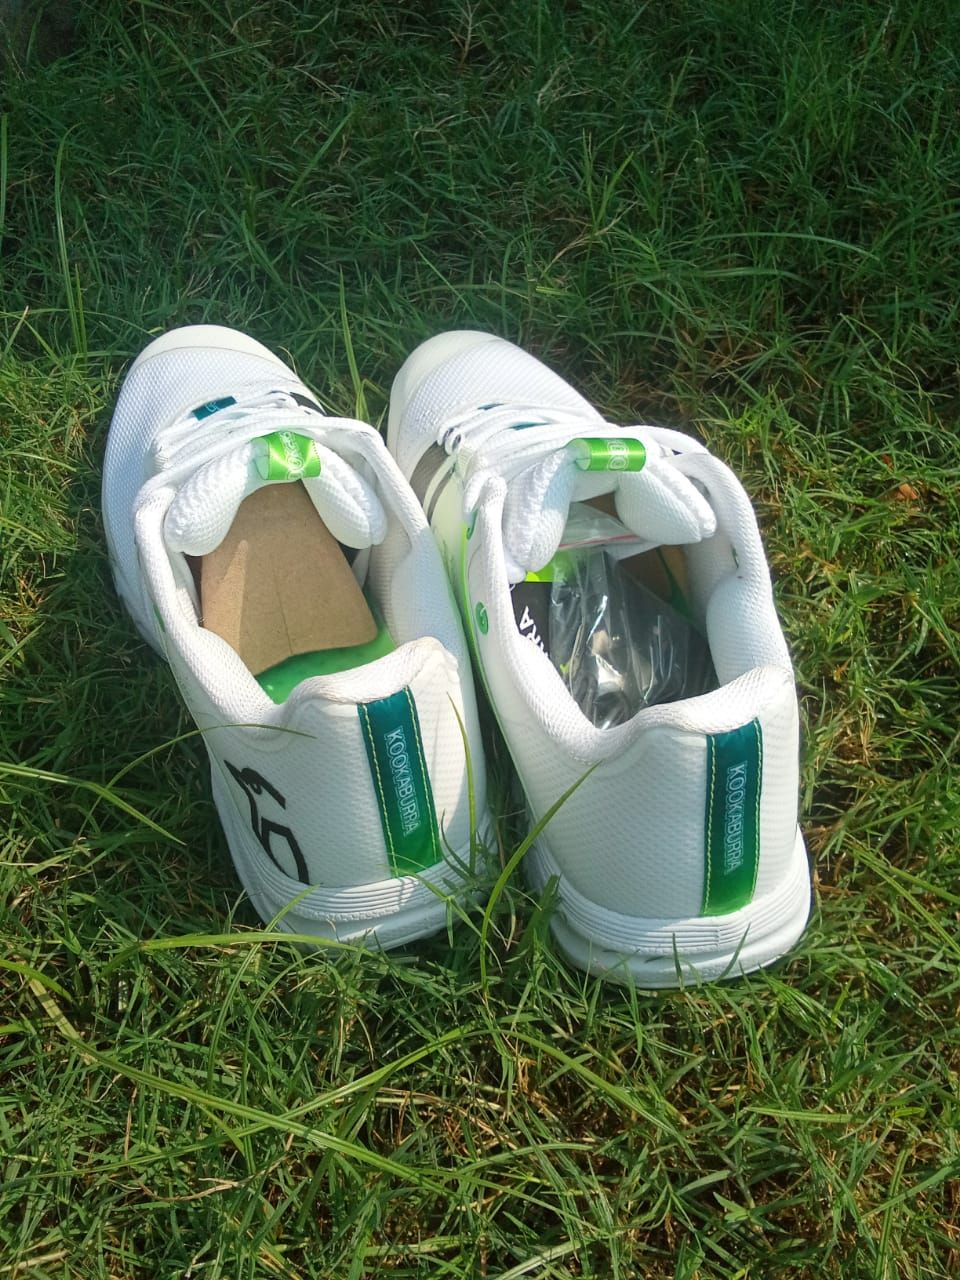 Kookaburra_pro_2.0_Spikes_shoes